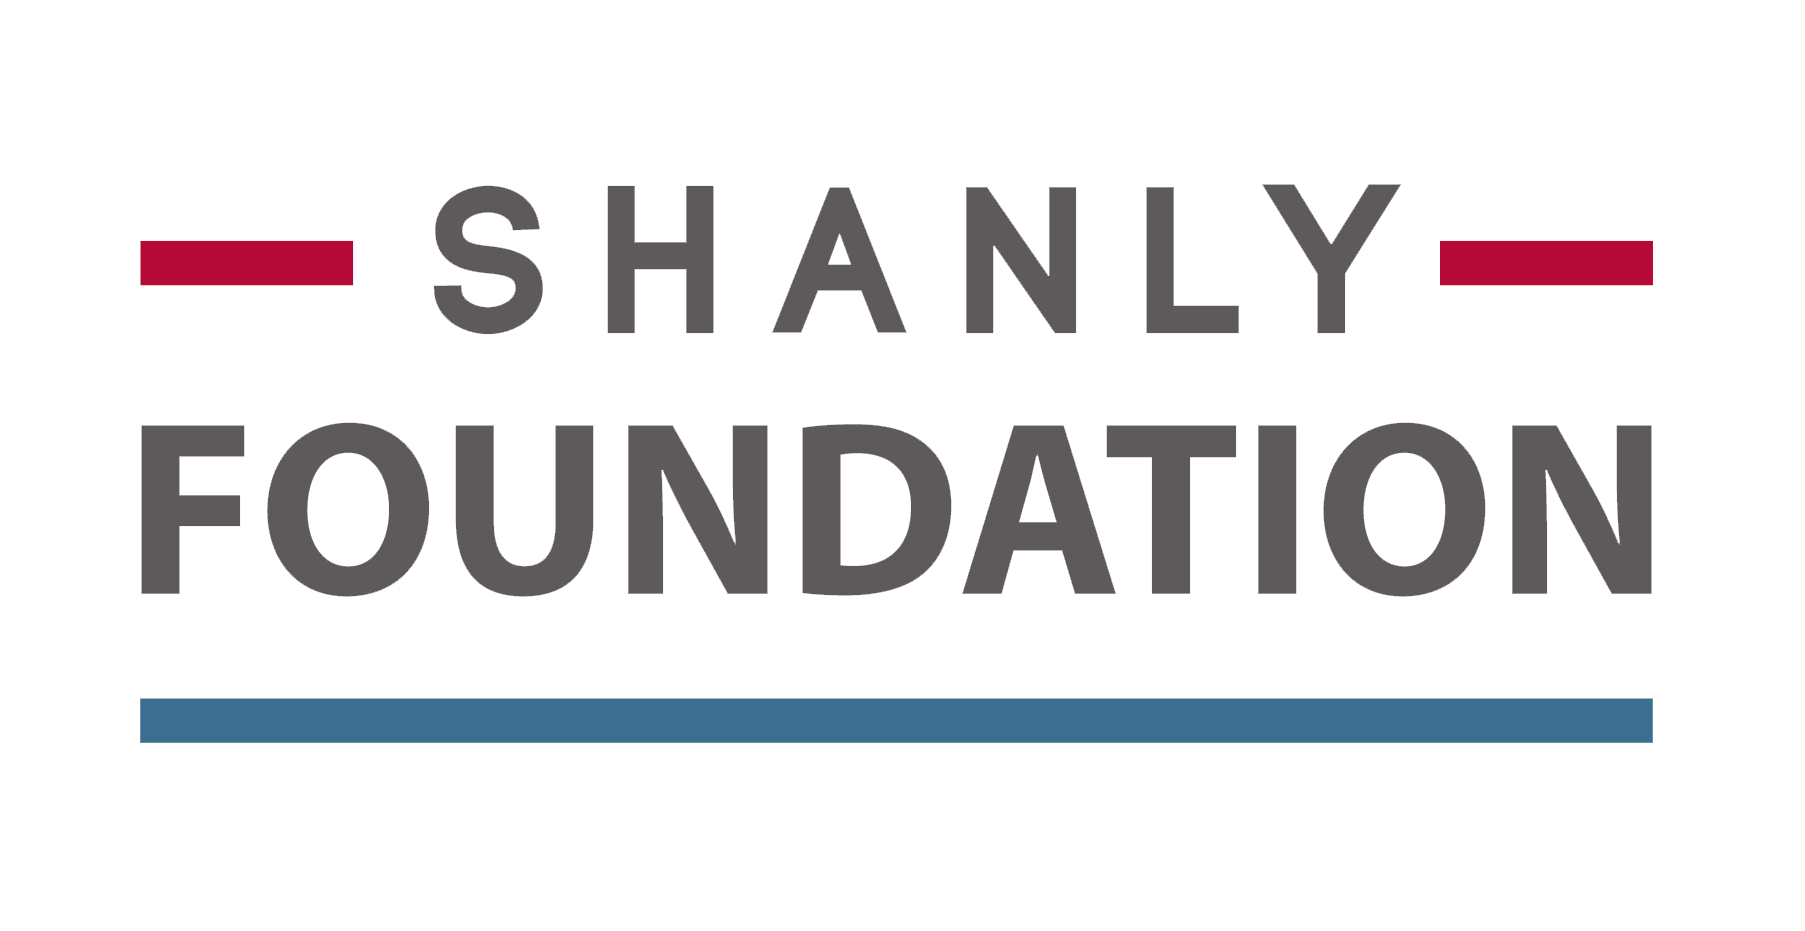 The Shanley Foundation